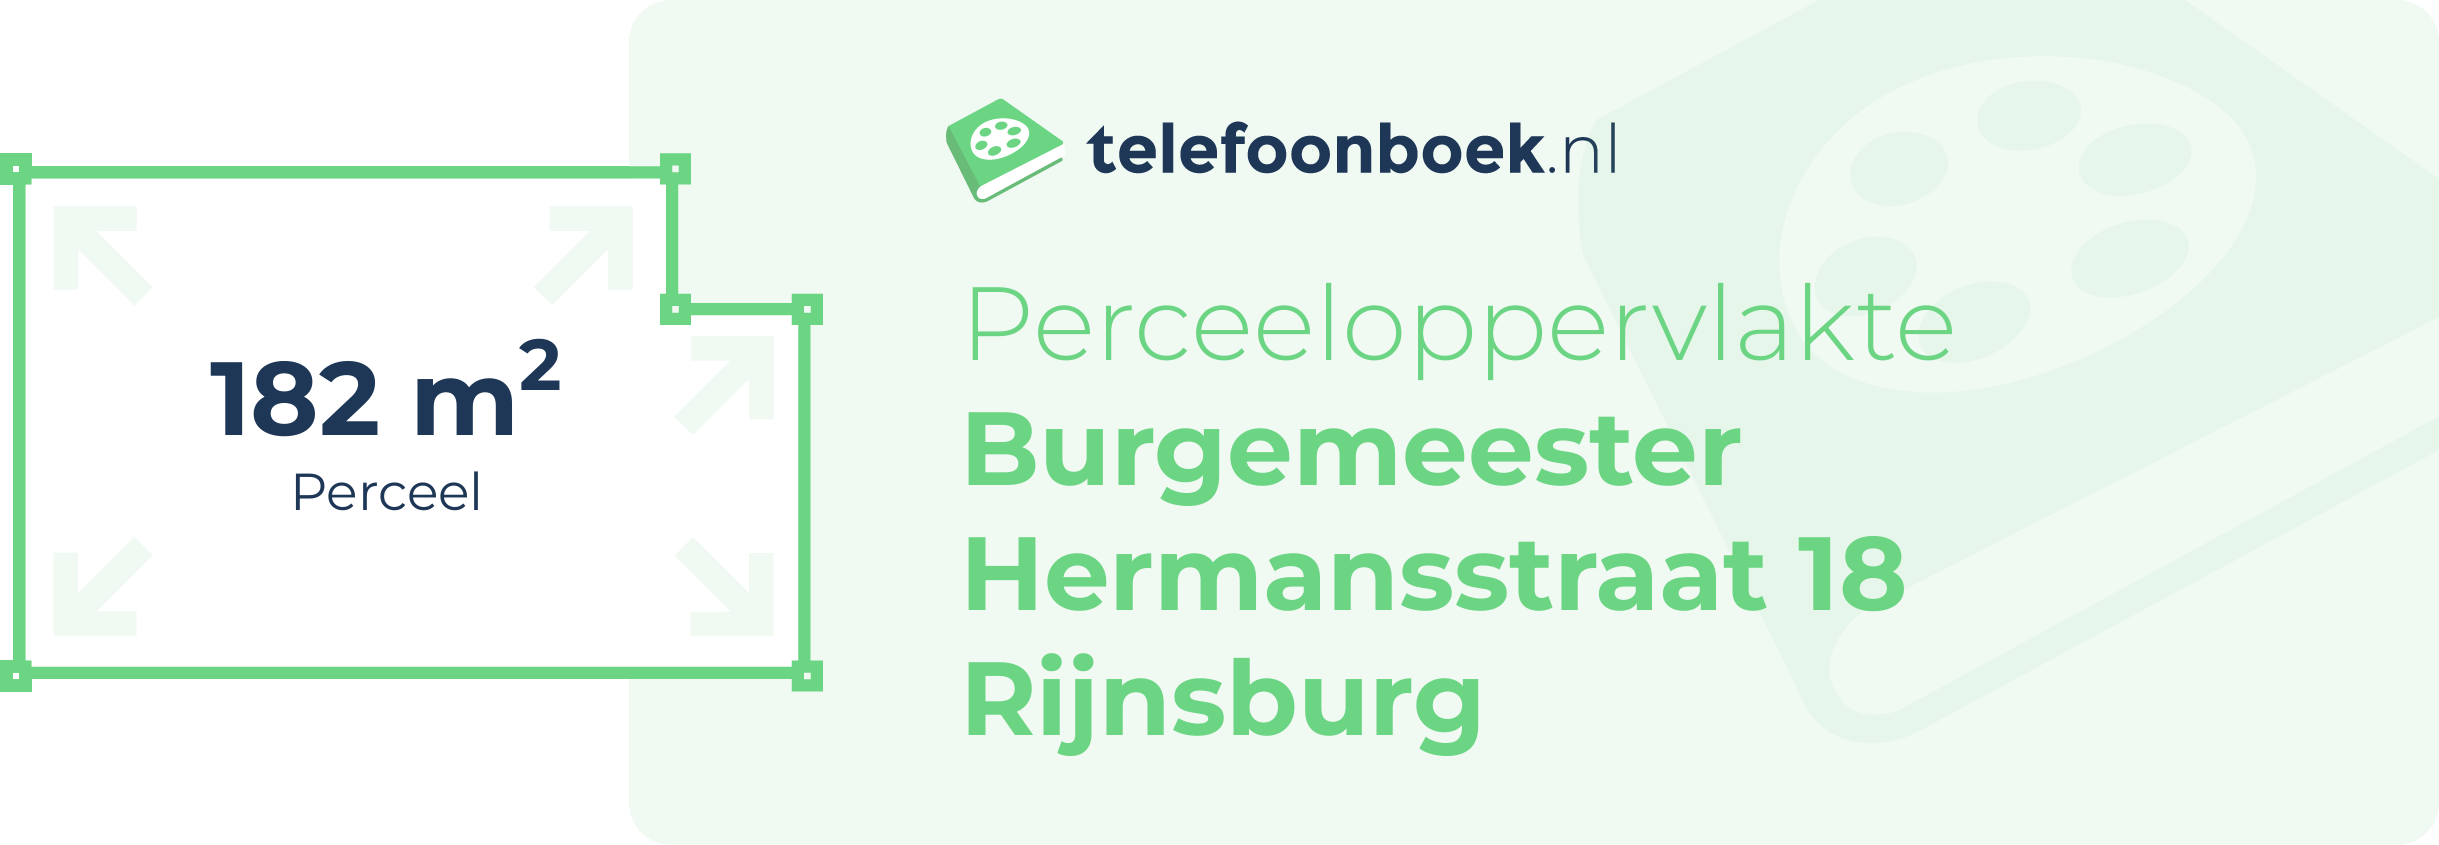 Perceeloppervlakte Burgemeester Hermansstraat 18 Rijnsburg